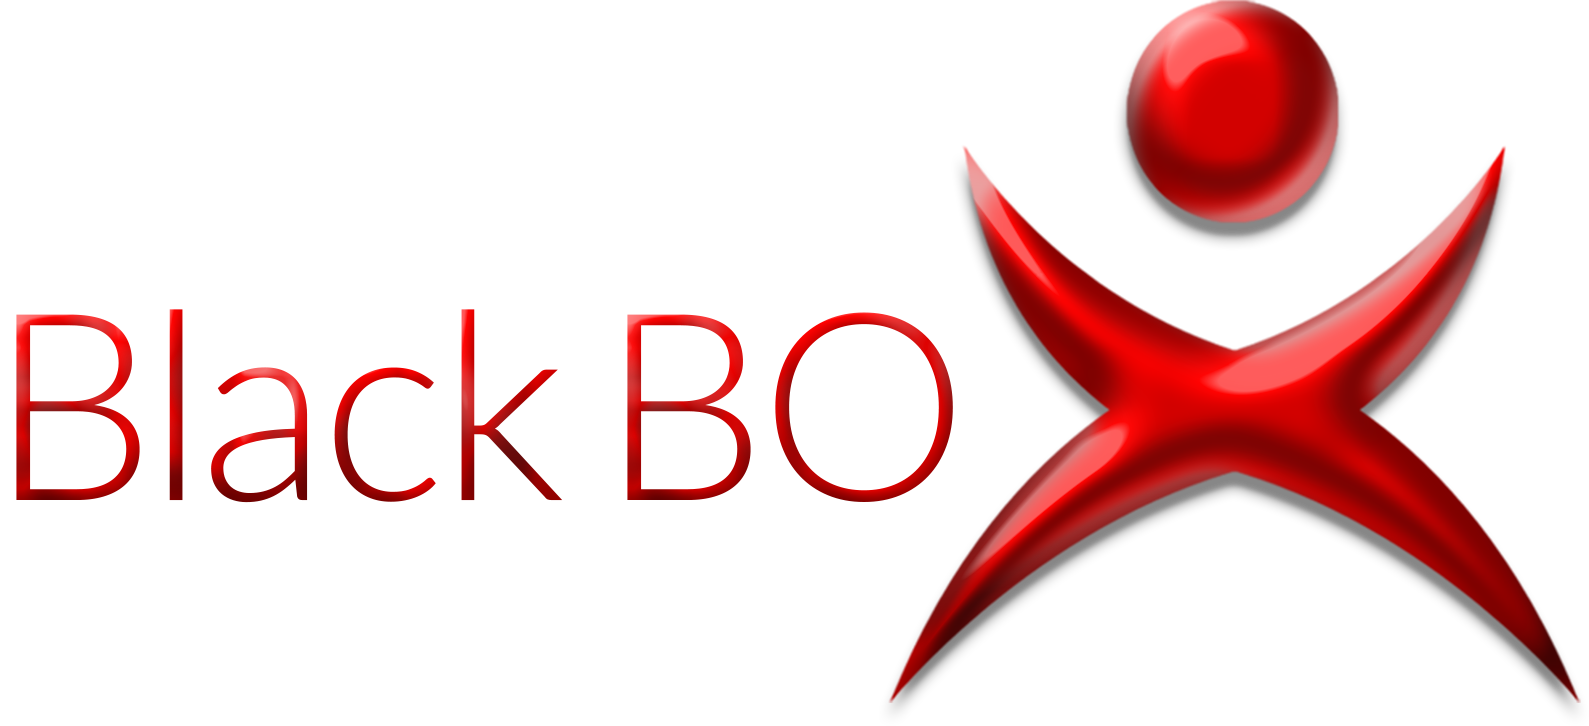 BlackBox Logo